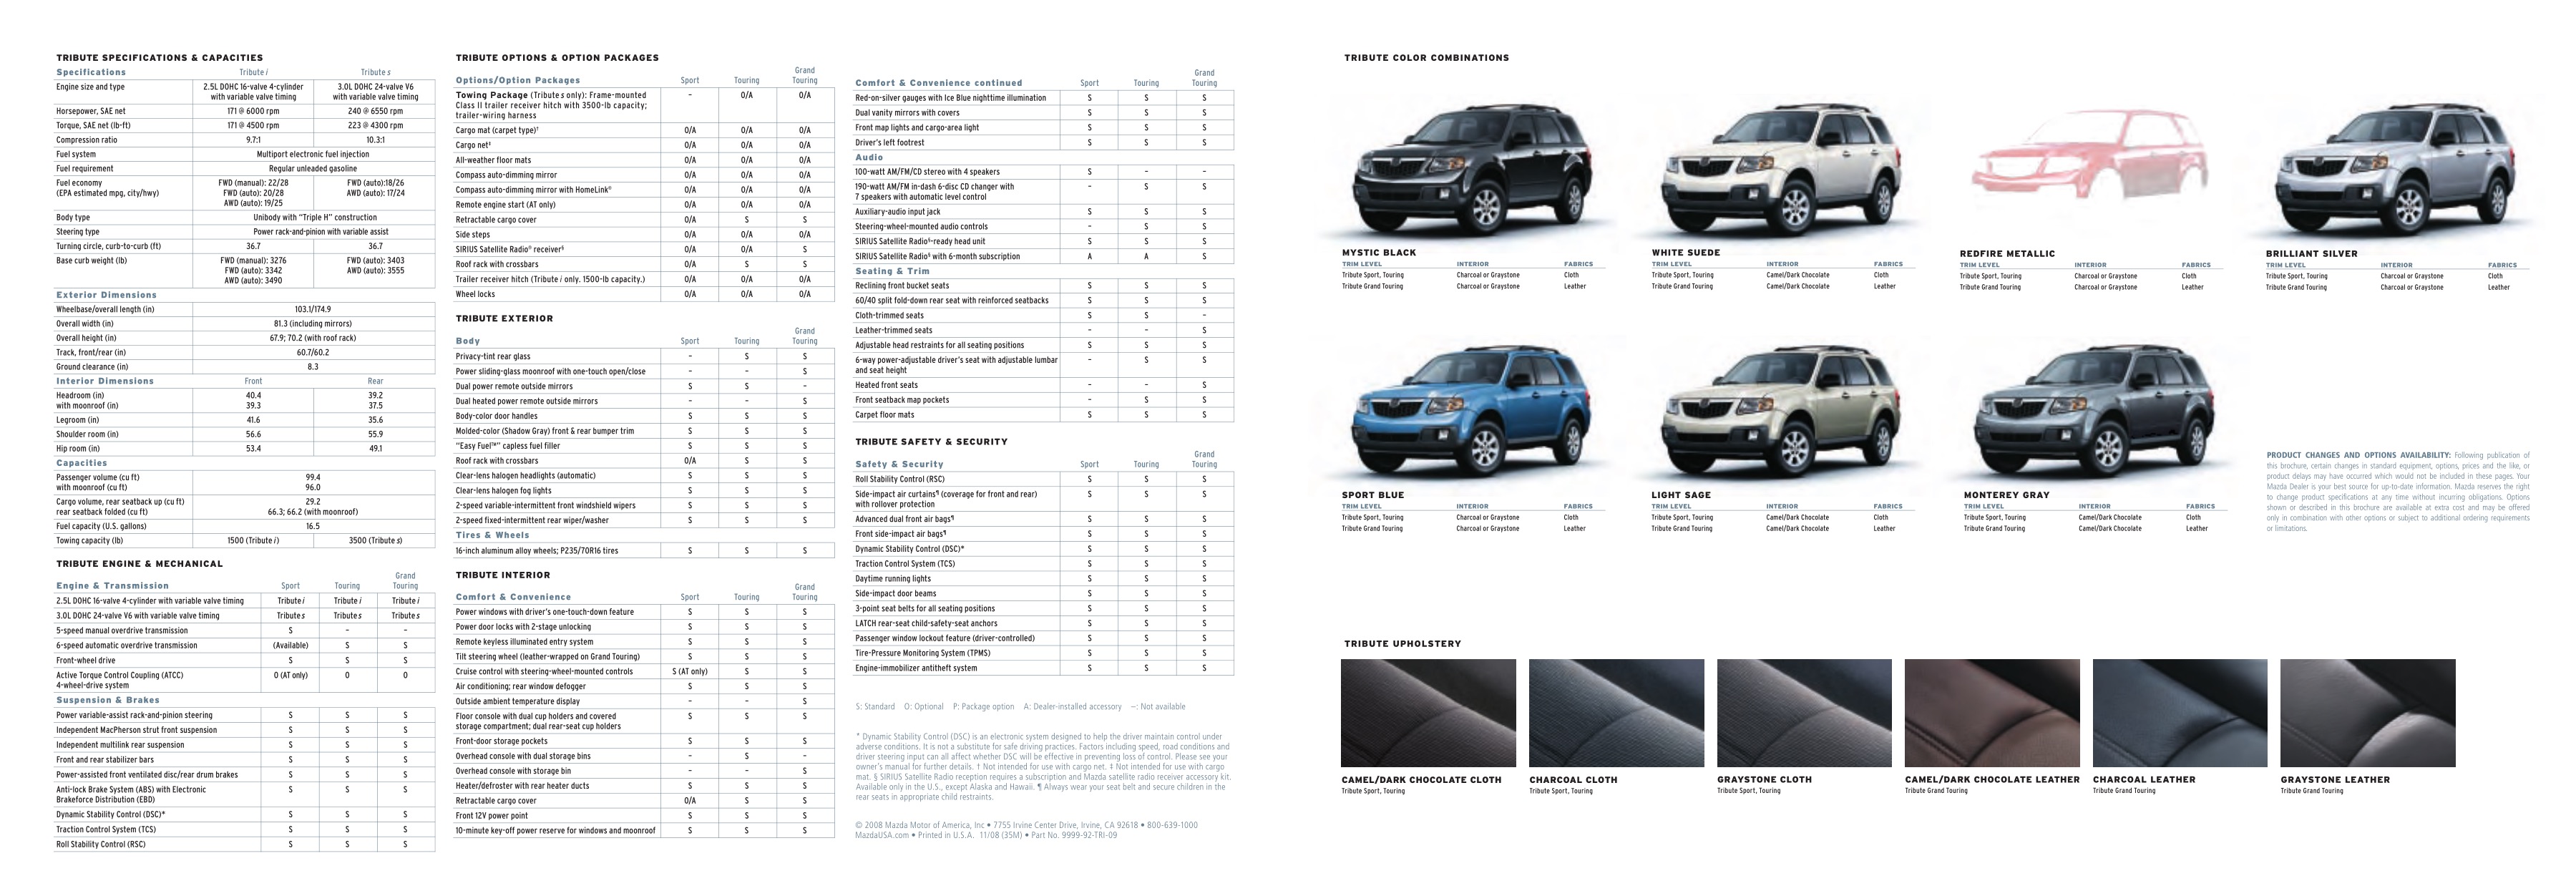 2009 Mazda Tribute Brochure Page 2